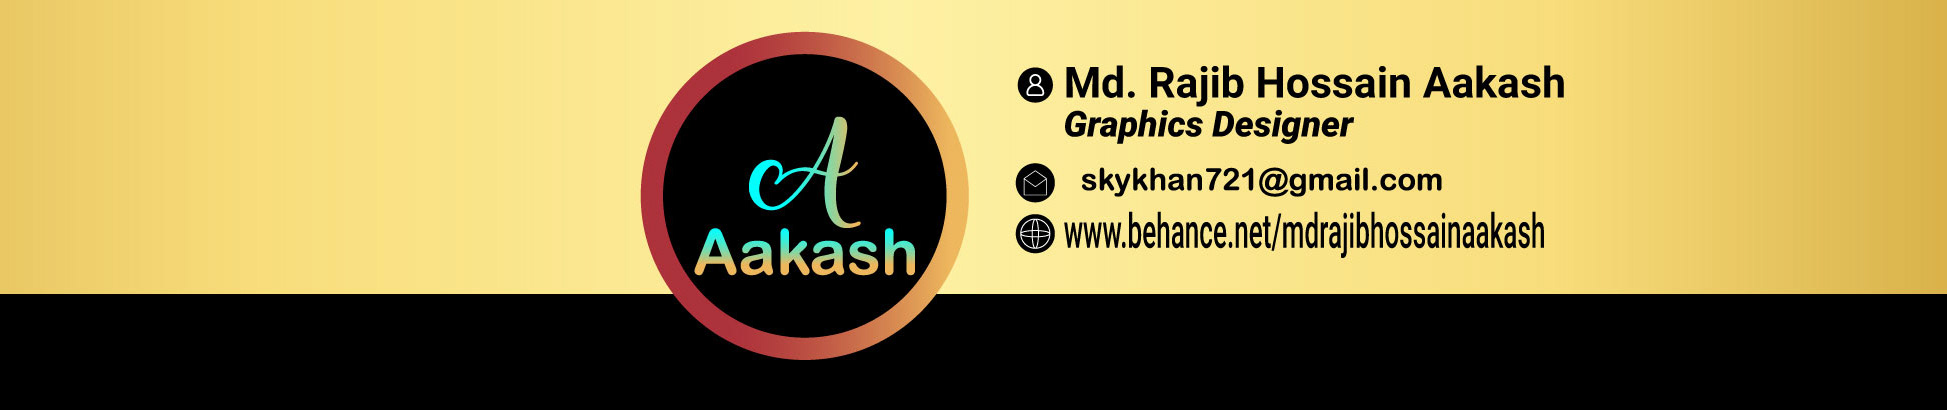 Md. Rajib Hossain Aakash's profile banner